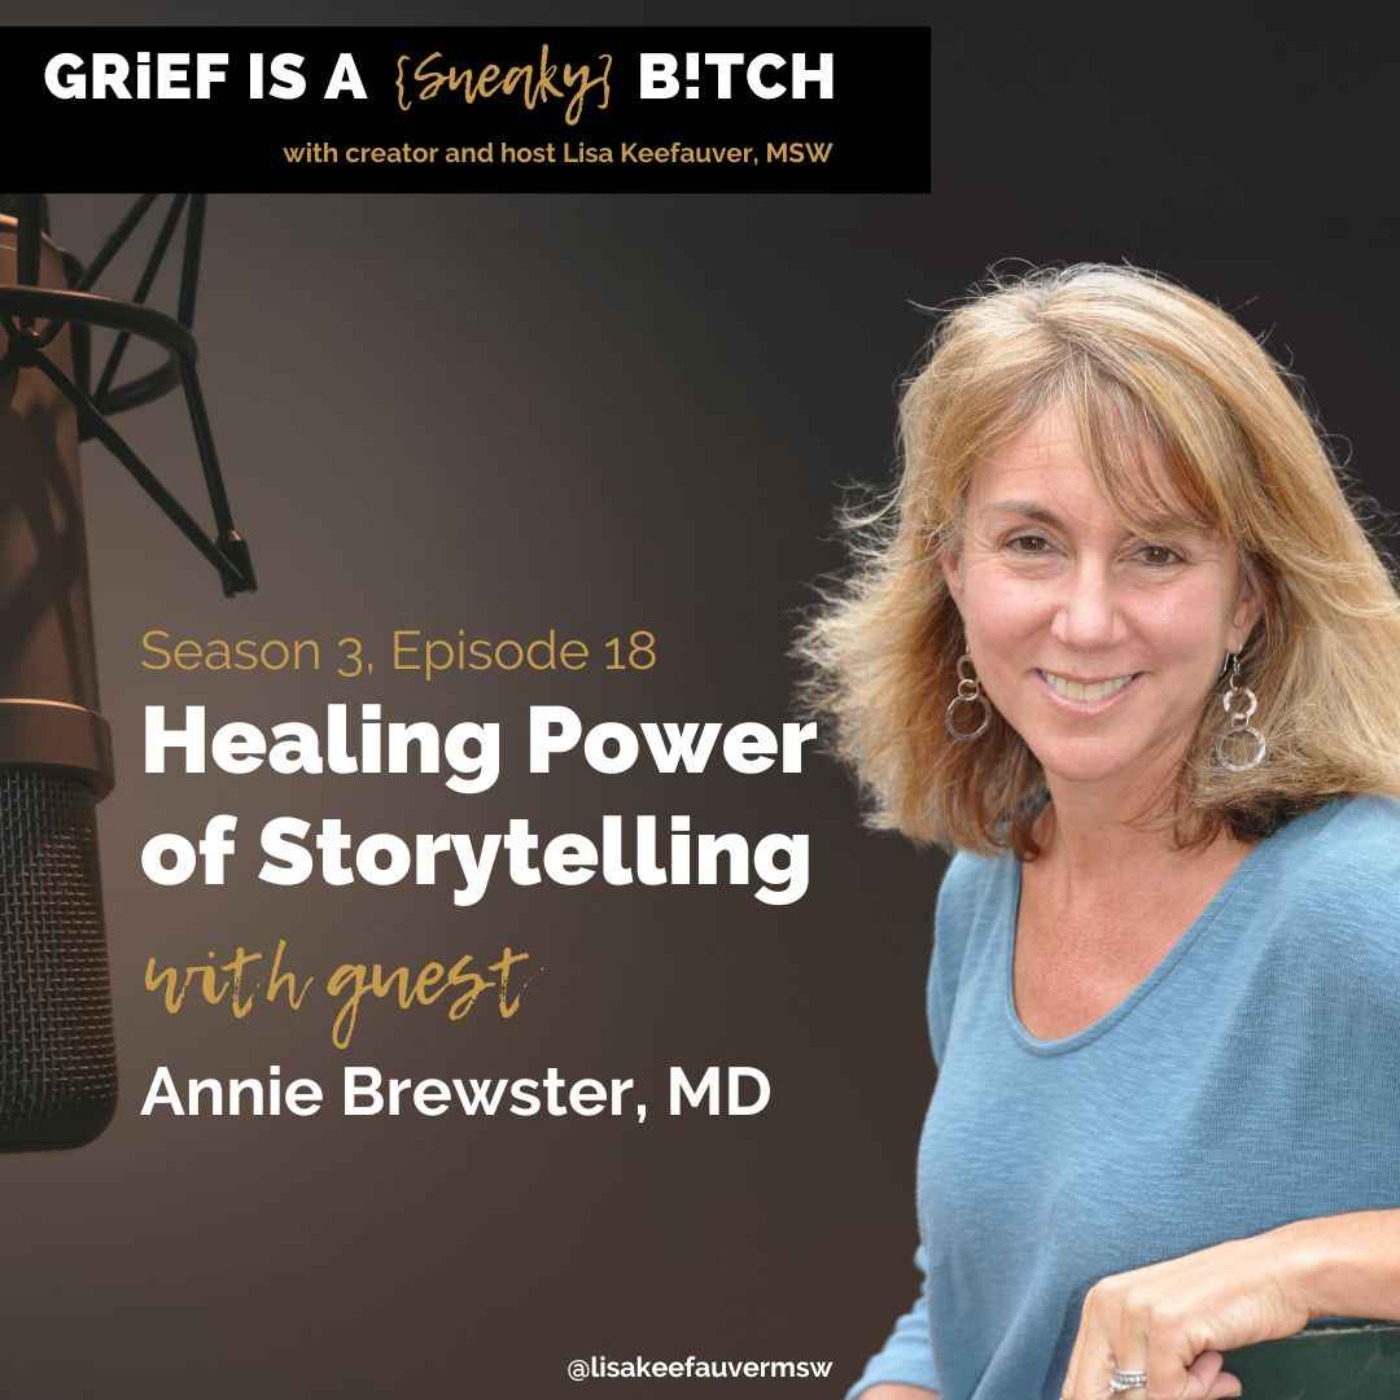 Annie Brewster, MD | Healing Power of Storytelling